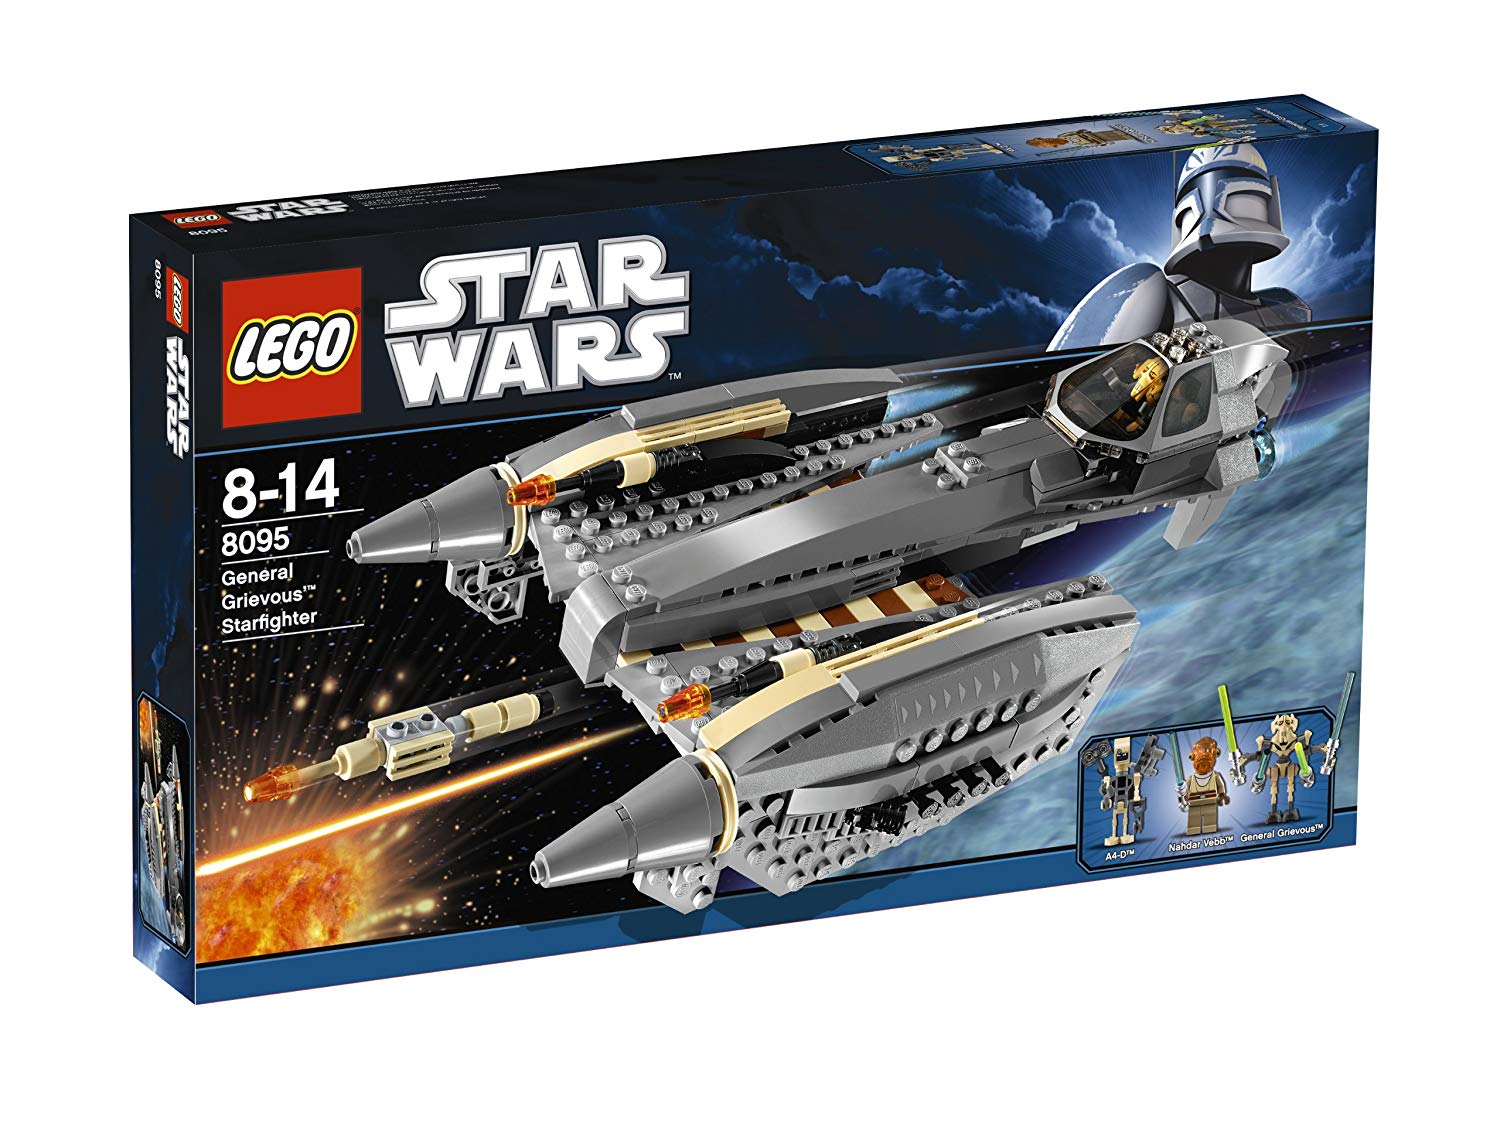 Lego Star Wars 8095 - General Grievous Starfighter